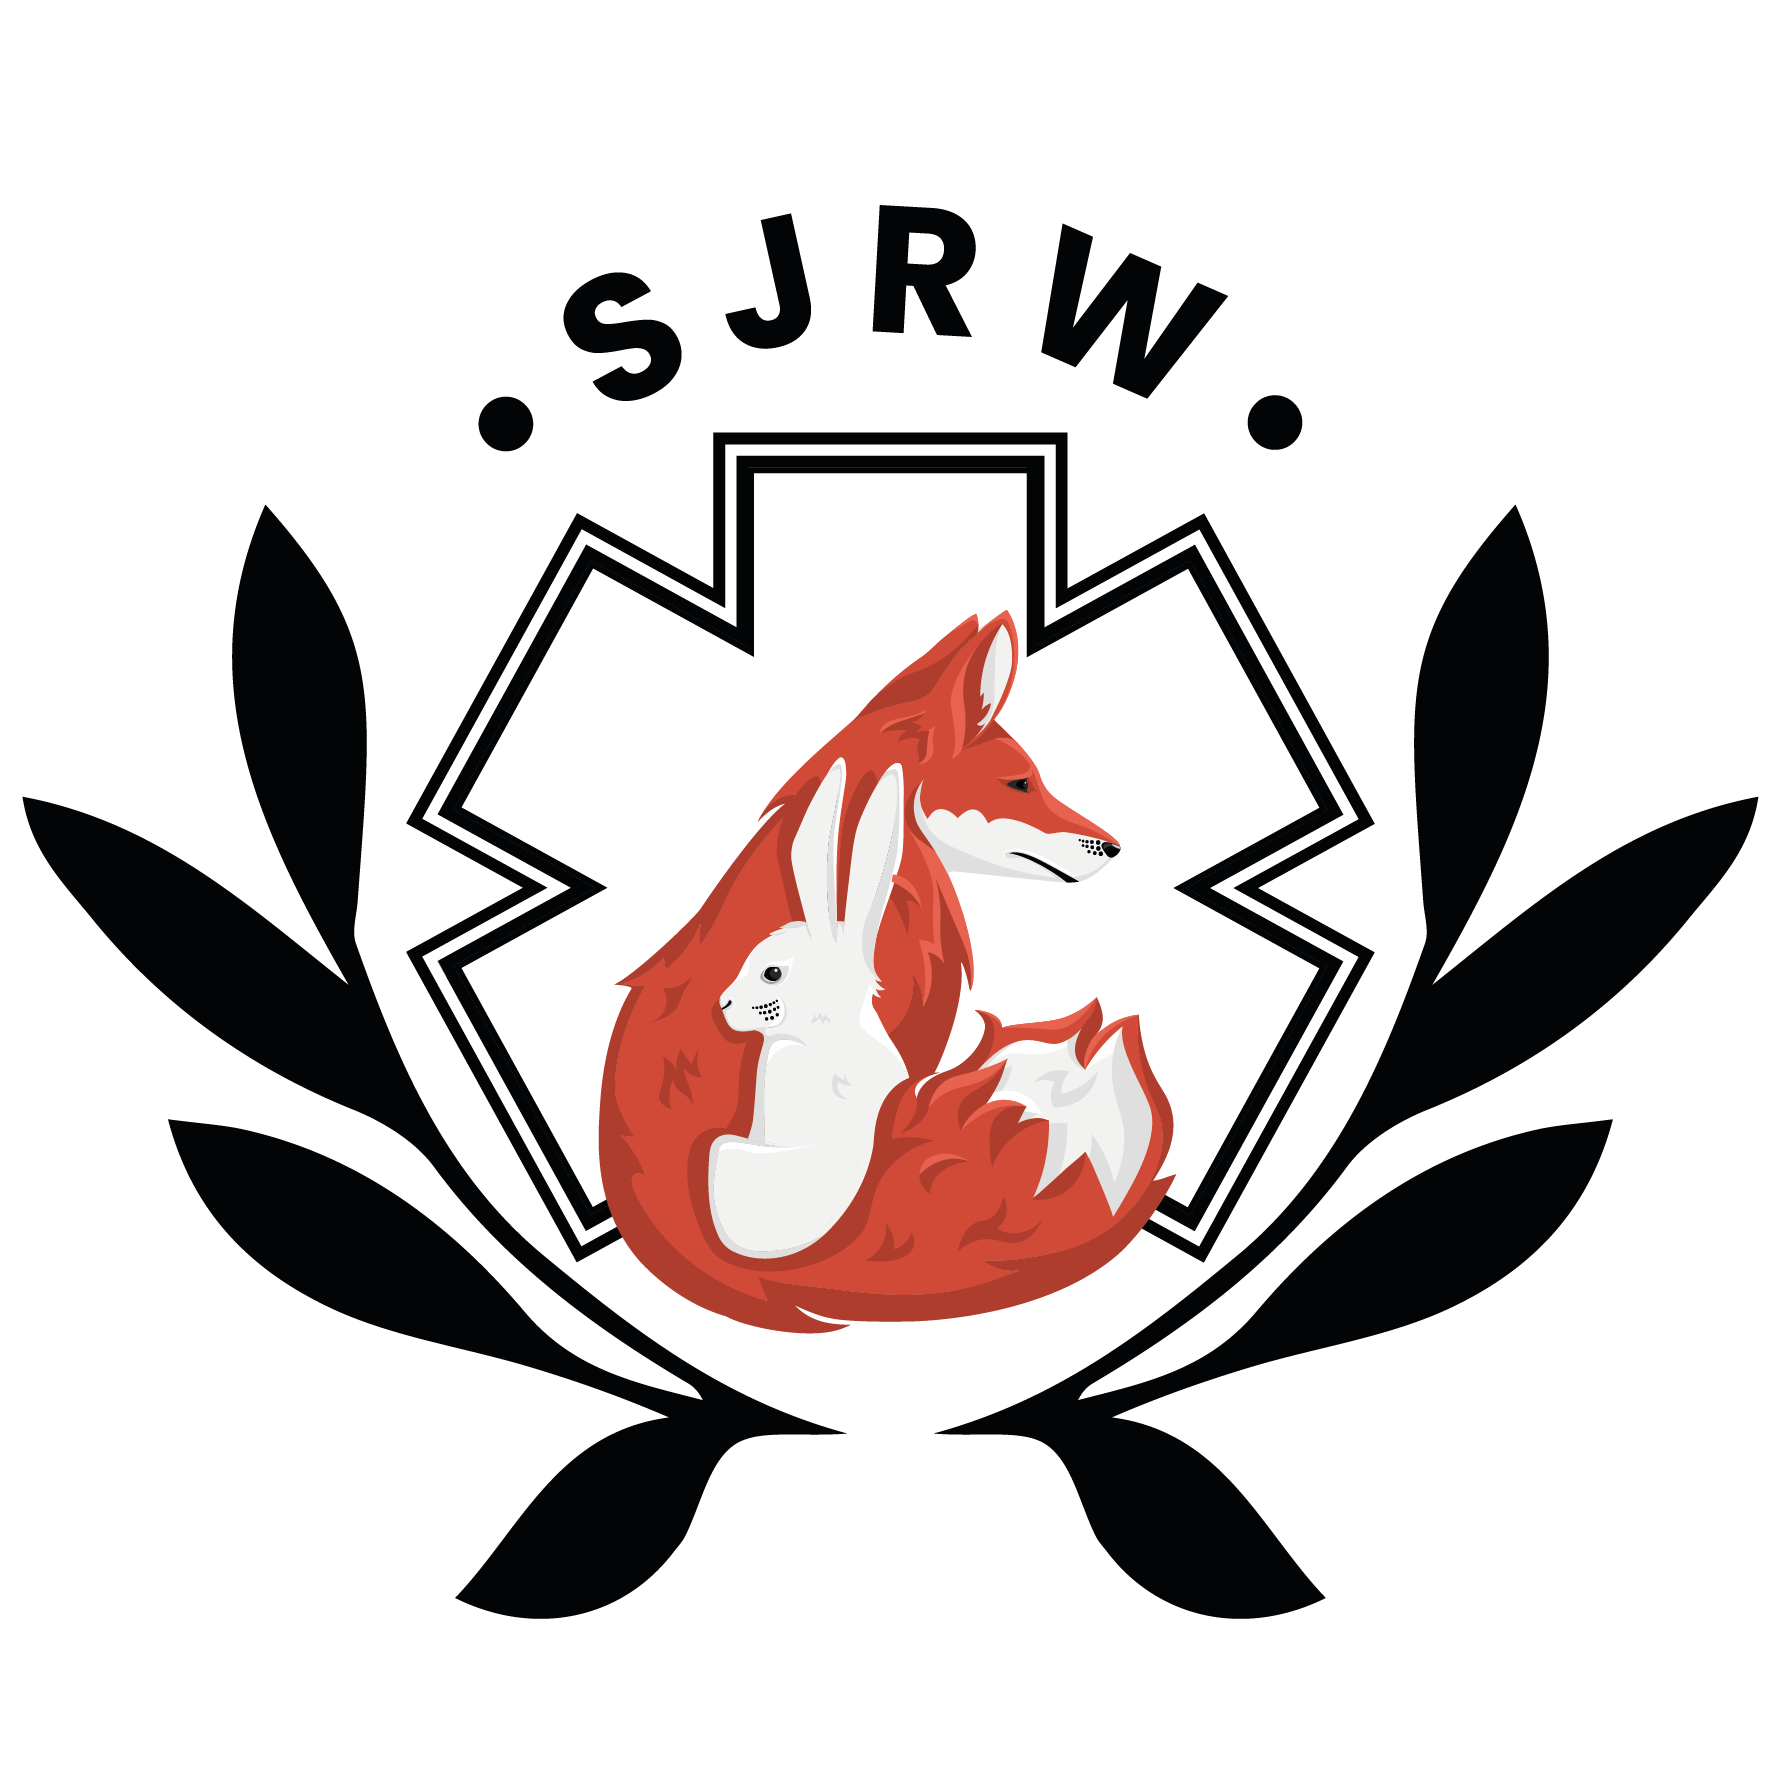 SJRW - Polish Specialized Veterinary Rescue Unit logo